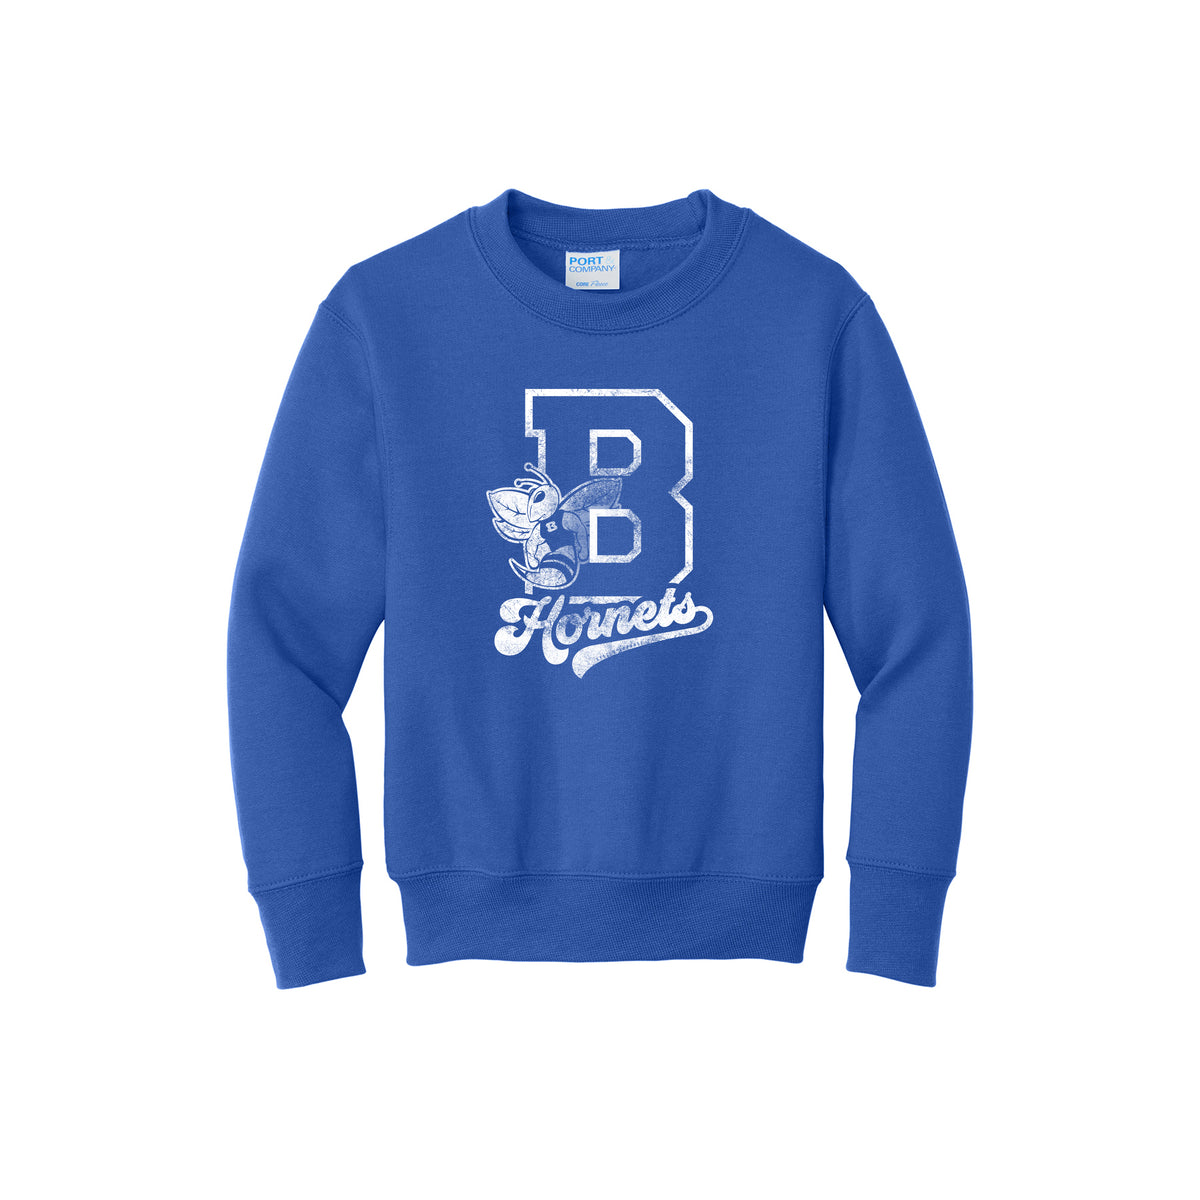 Bryant Hornets Insignia YOUTH Sweatshirt